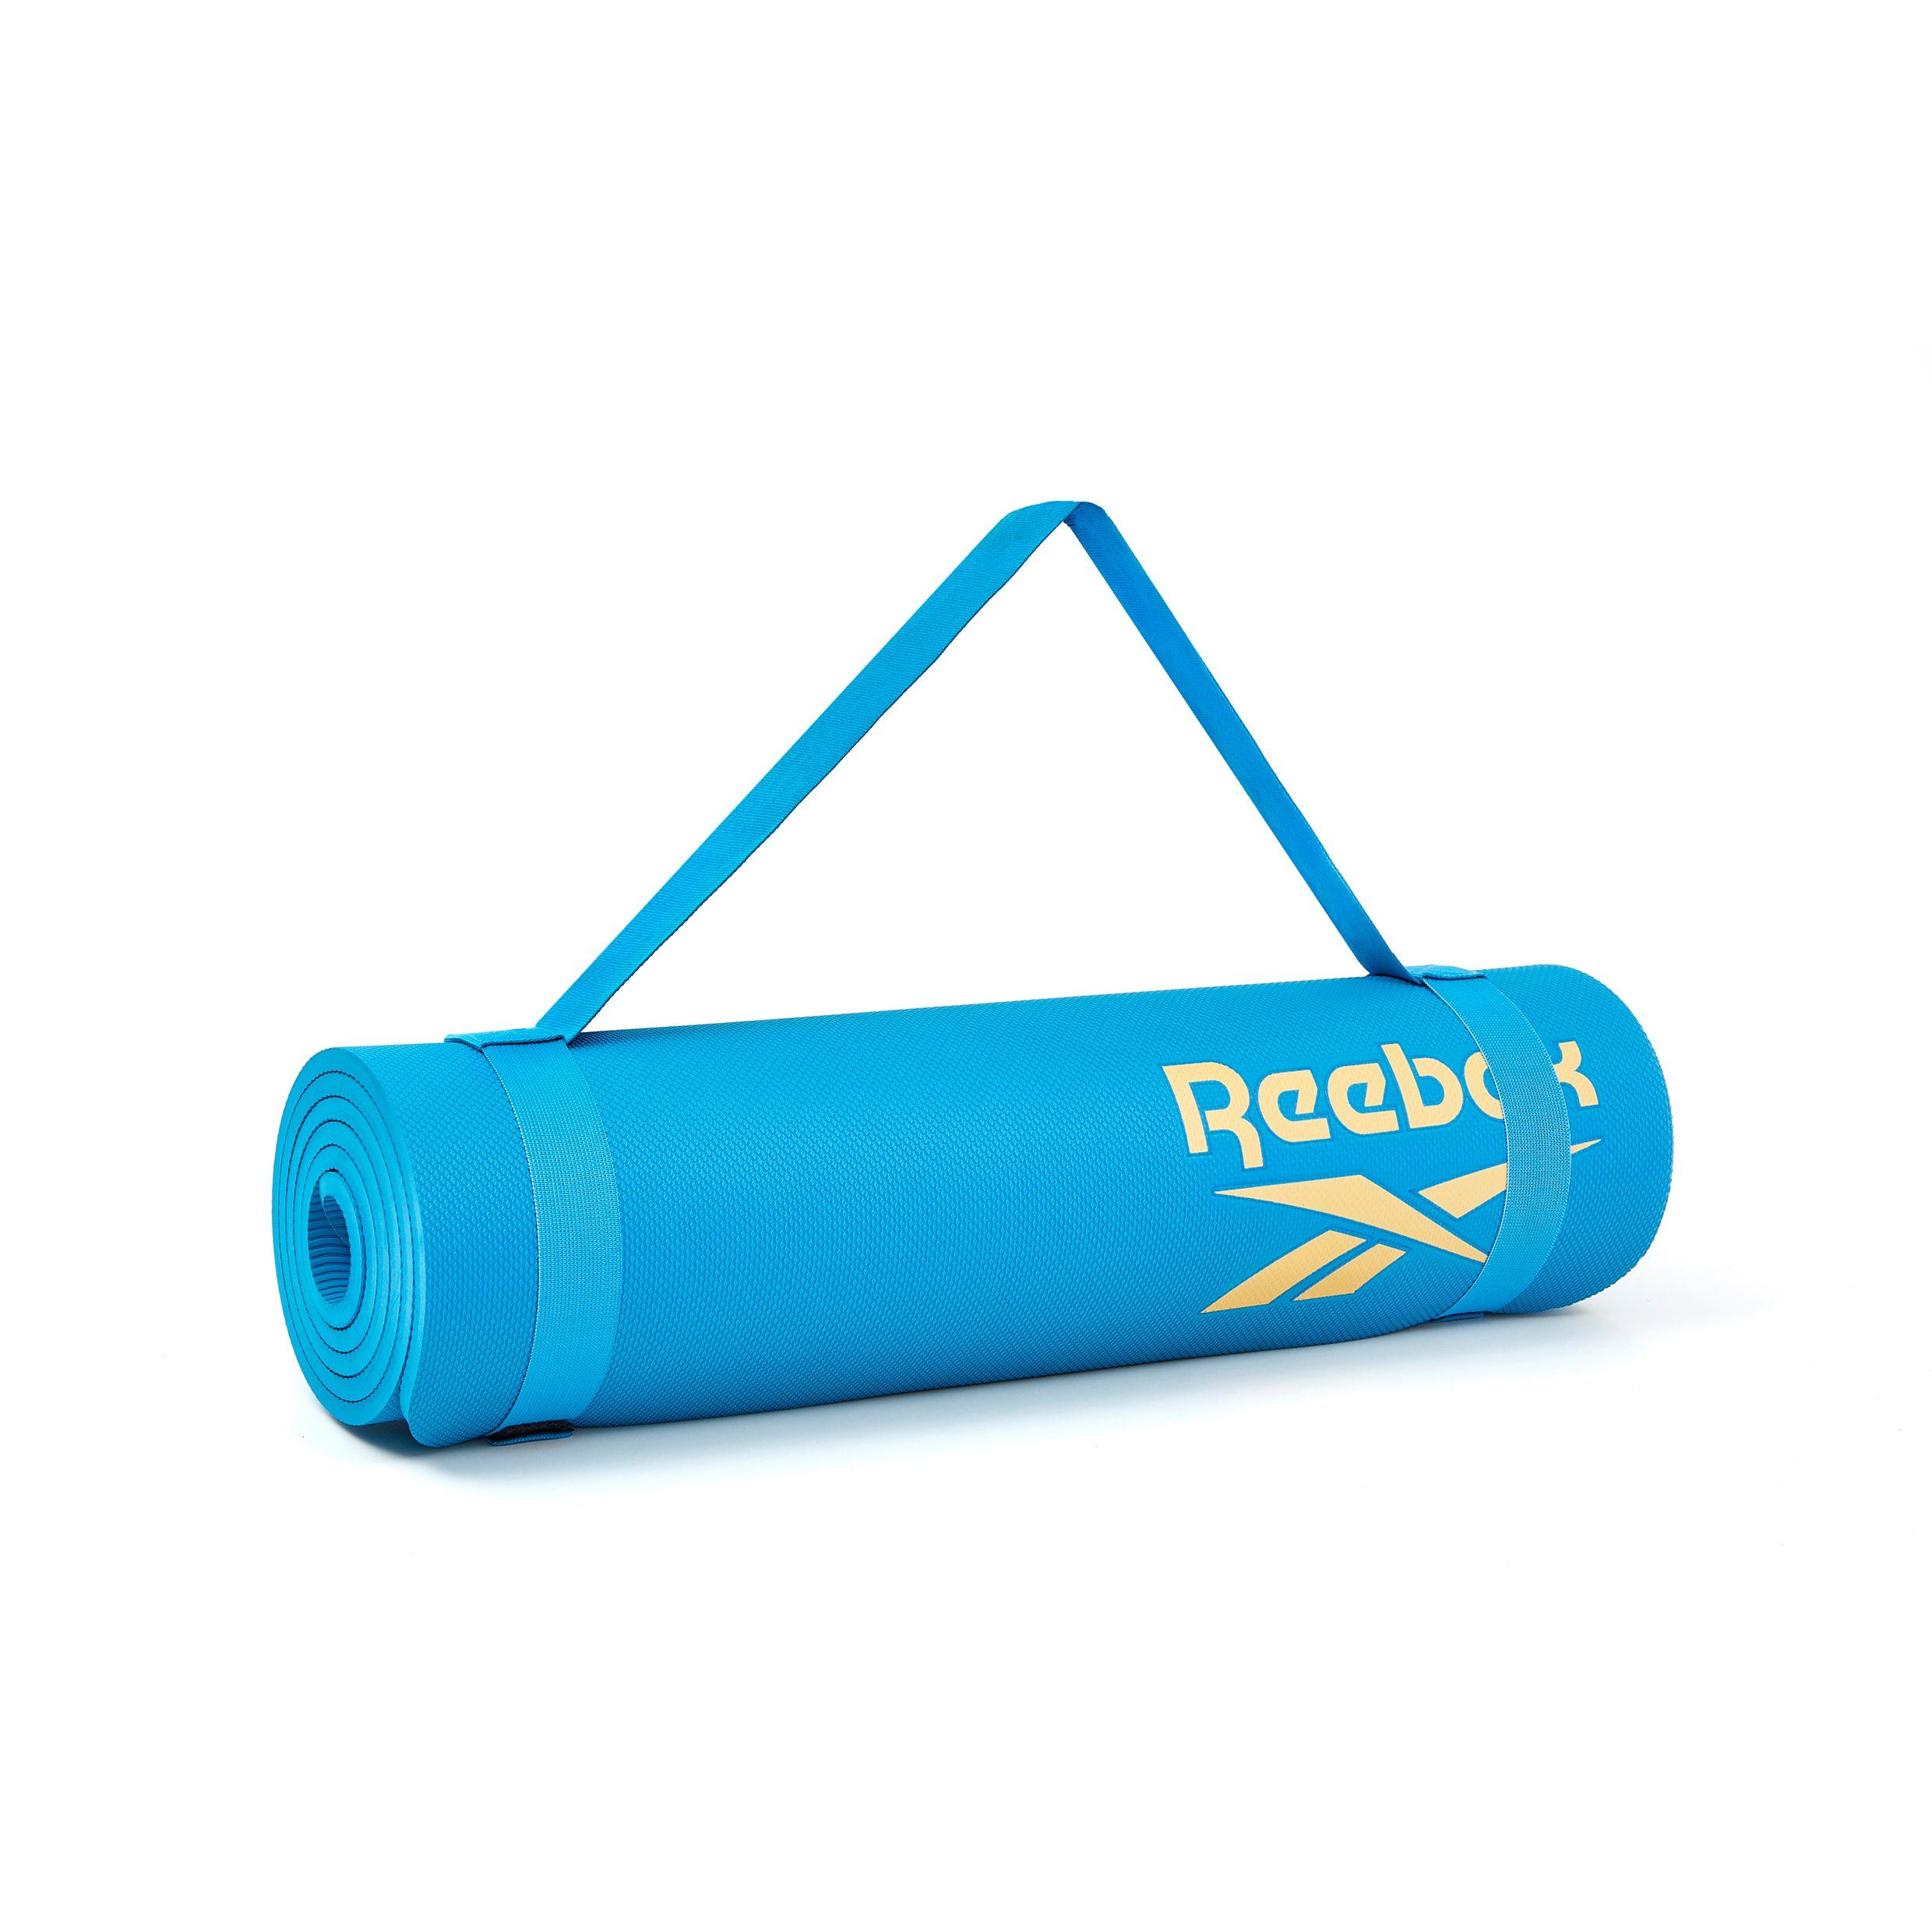 Reebok Fitnessmatte Reebok strapazierfähigem Blau, mit und Fitness-/Trainingsmatte 8mm, rutschfestem Performance, Material